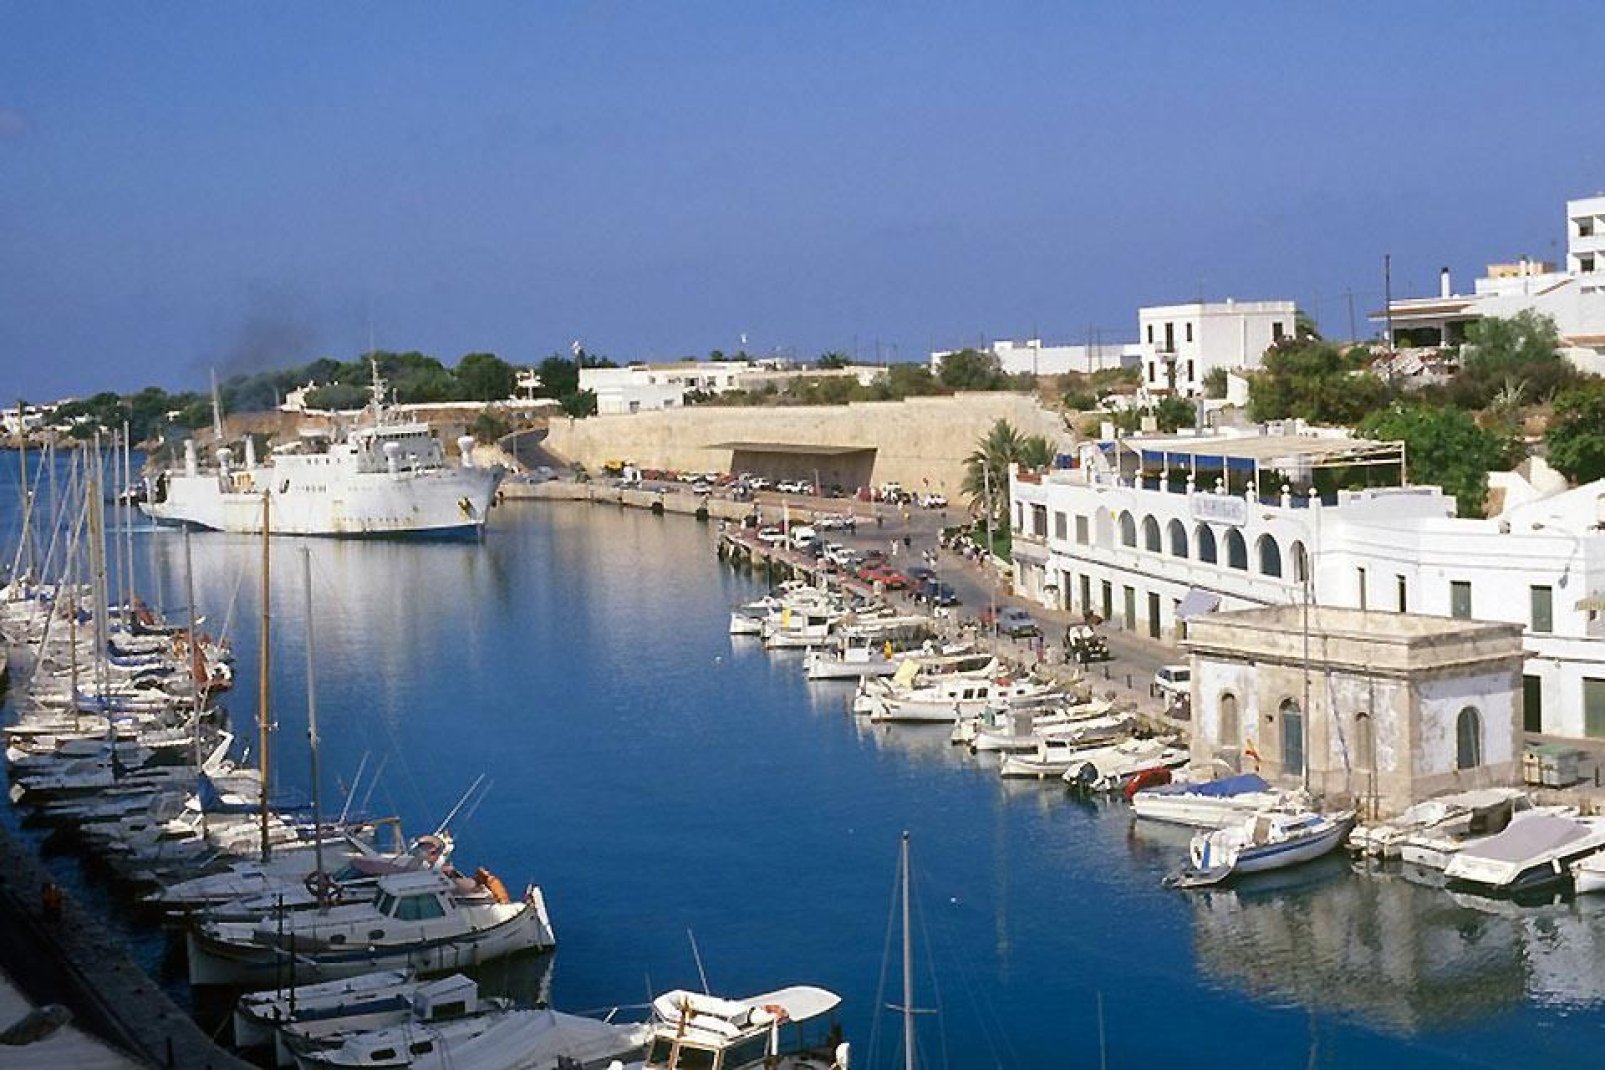 Ciutadella est la deuxième plus grande ville de Minorque, après la capitale Mao.